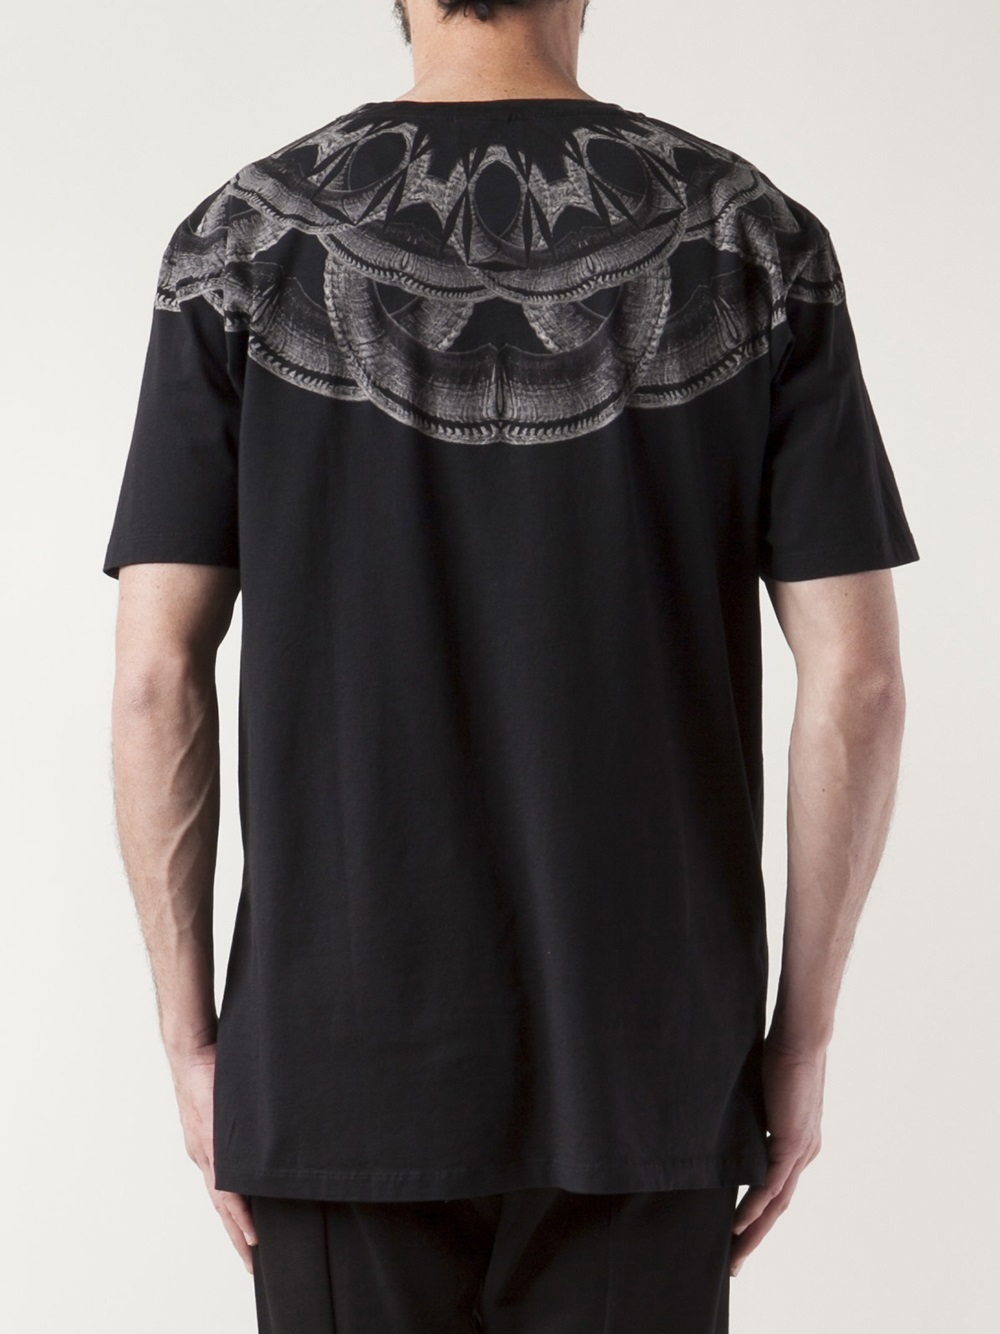 Marcelo burlon 'aconcagua' T-shirt in Black for Men - Save 54% | Lyst